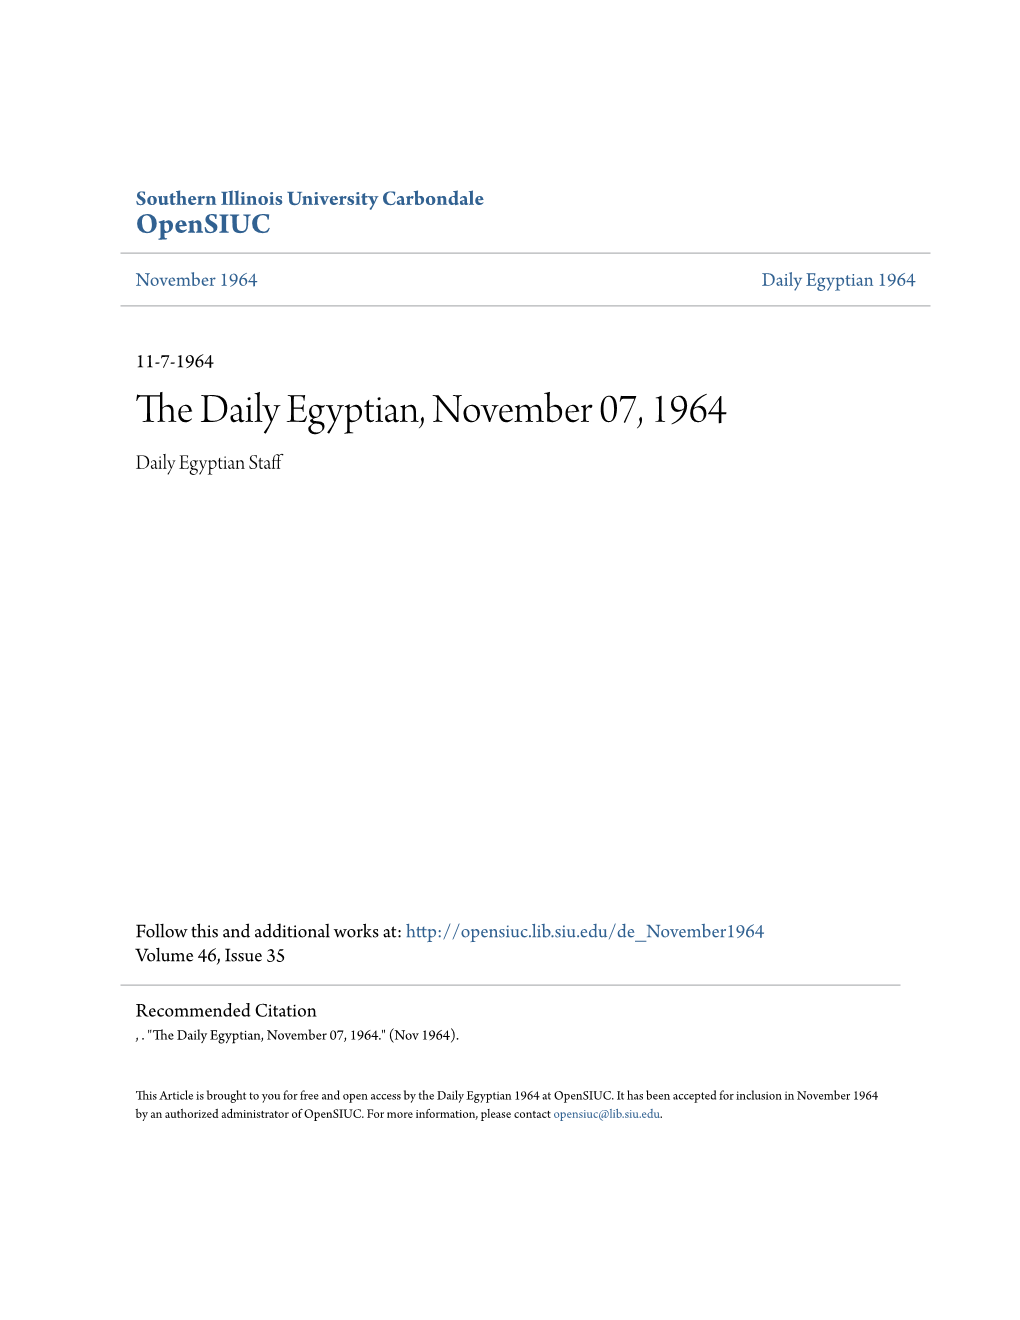 The Daily Egyptian, November 07, 1964